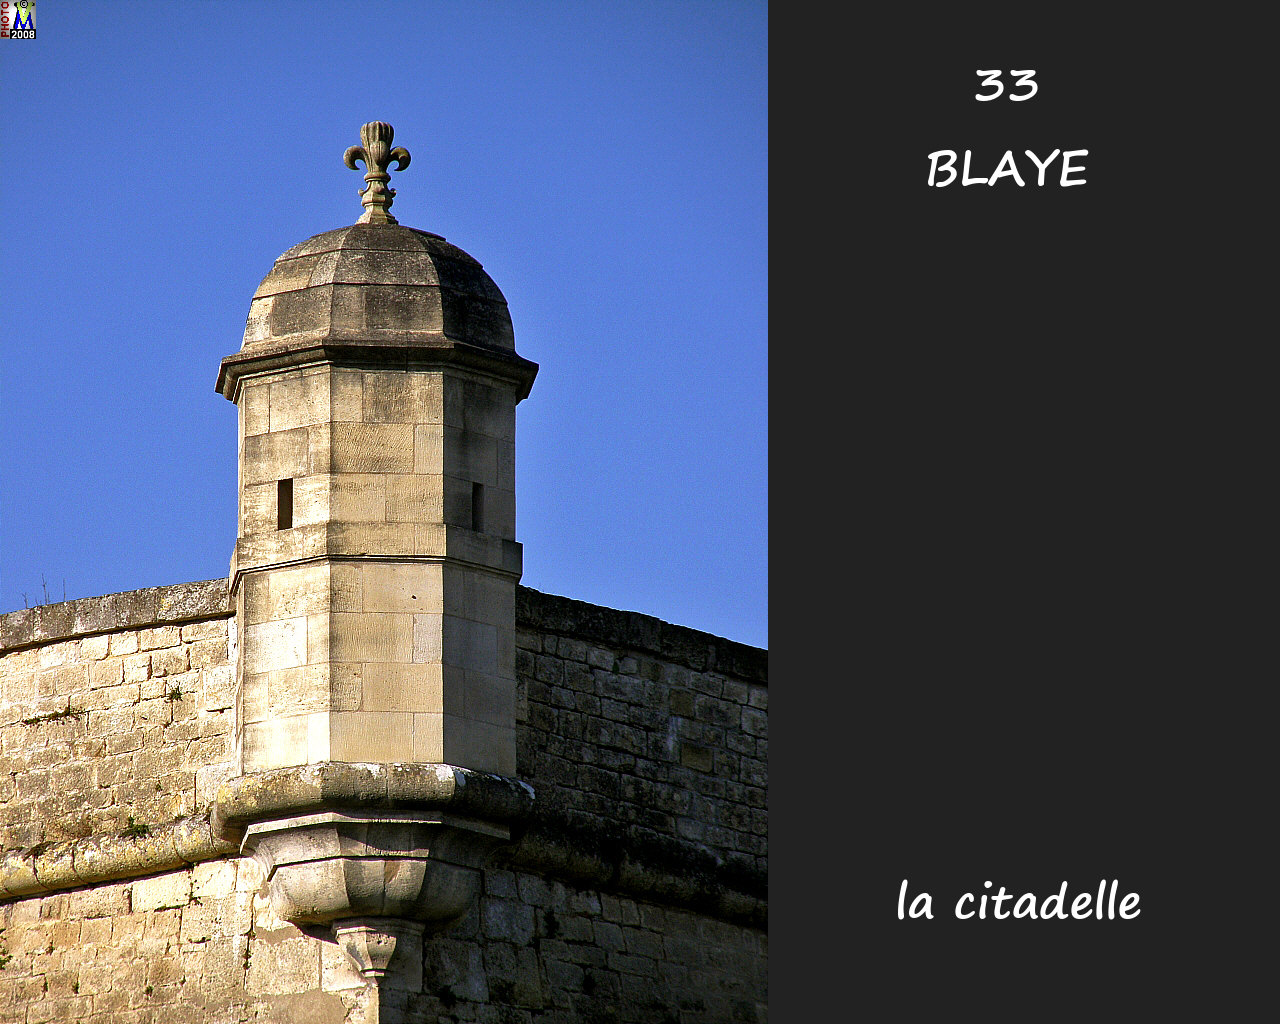 33BLAYE_citadelle_152.jpg